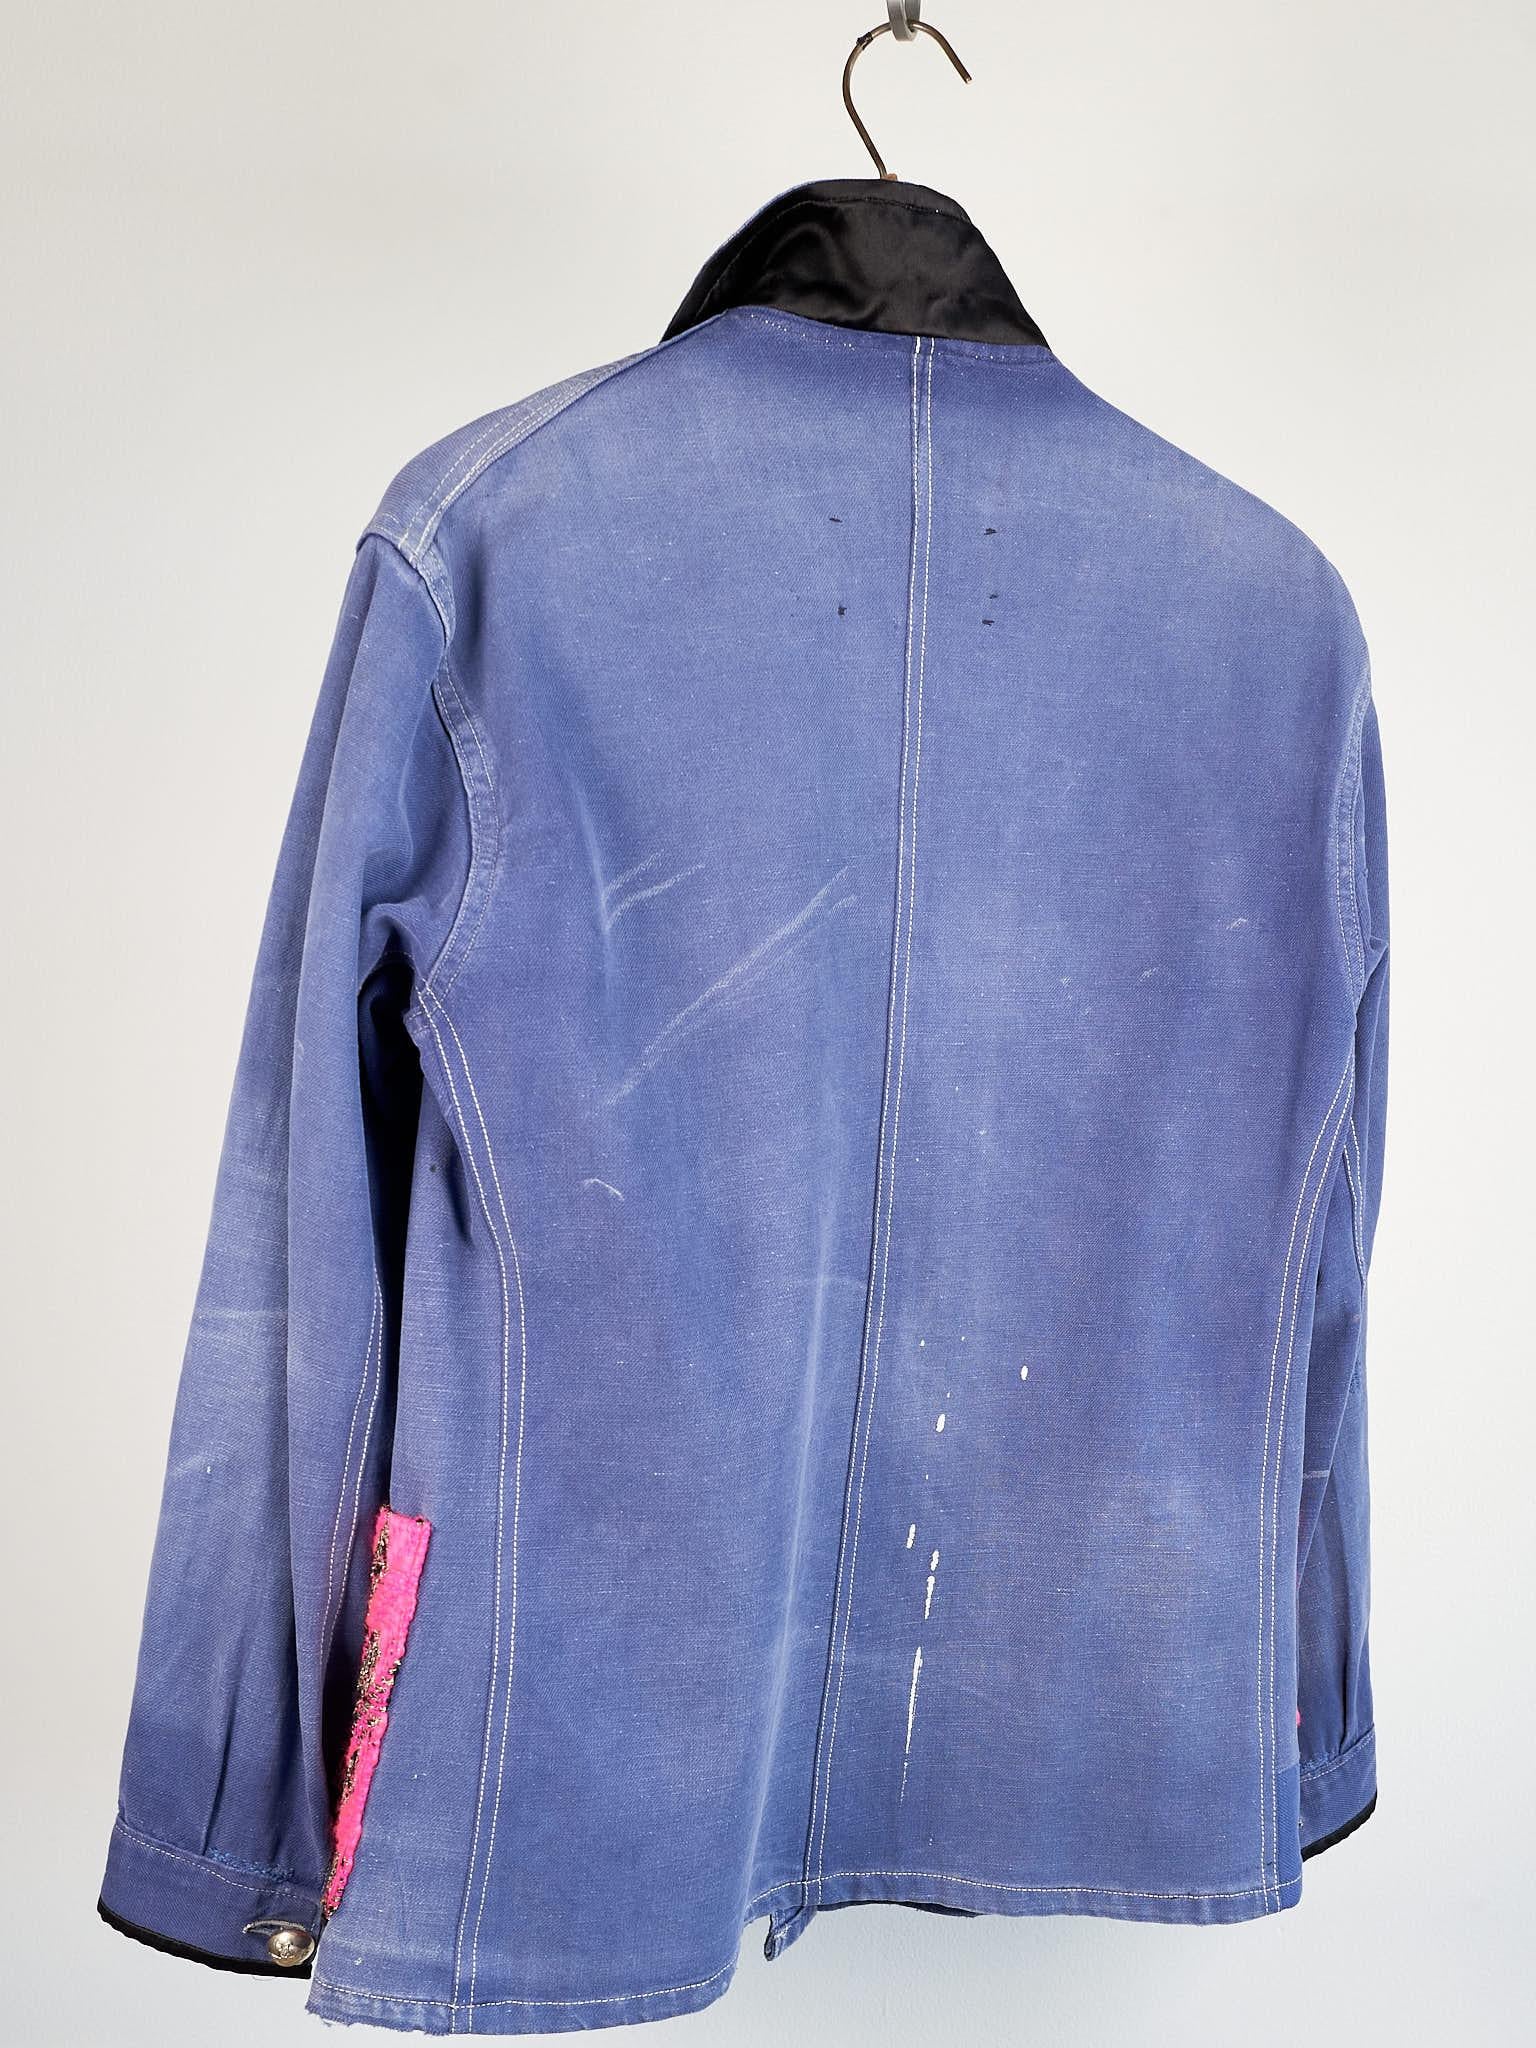 Vintage Distressed Jacket Blue French Work Wear Neon Pink Tweed Small 1